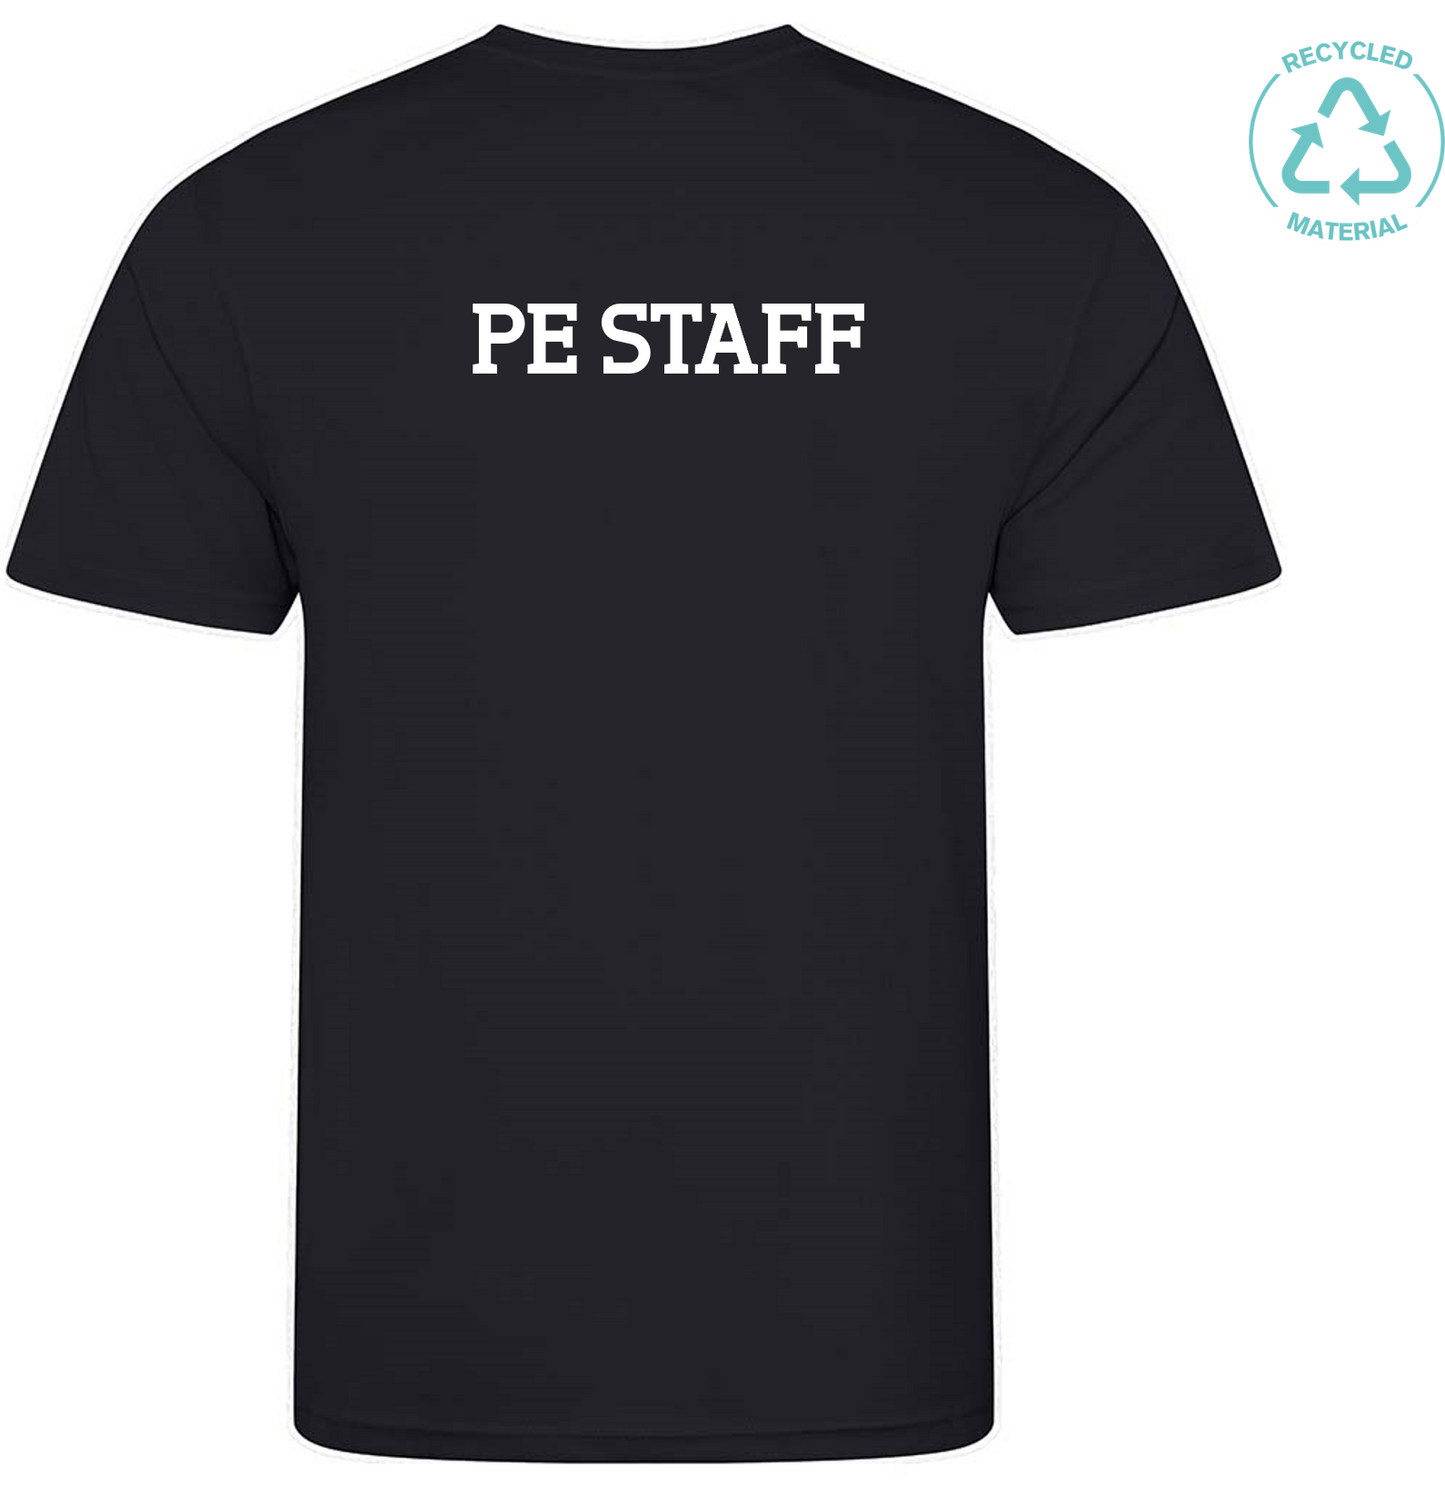 Moreton Hall Staff Tech T Shirt